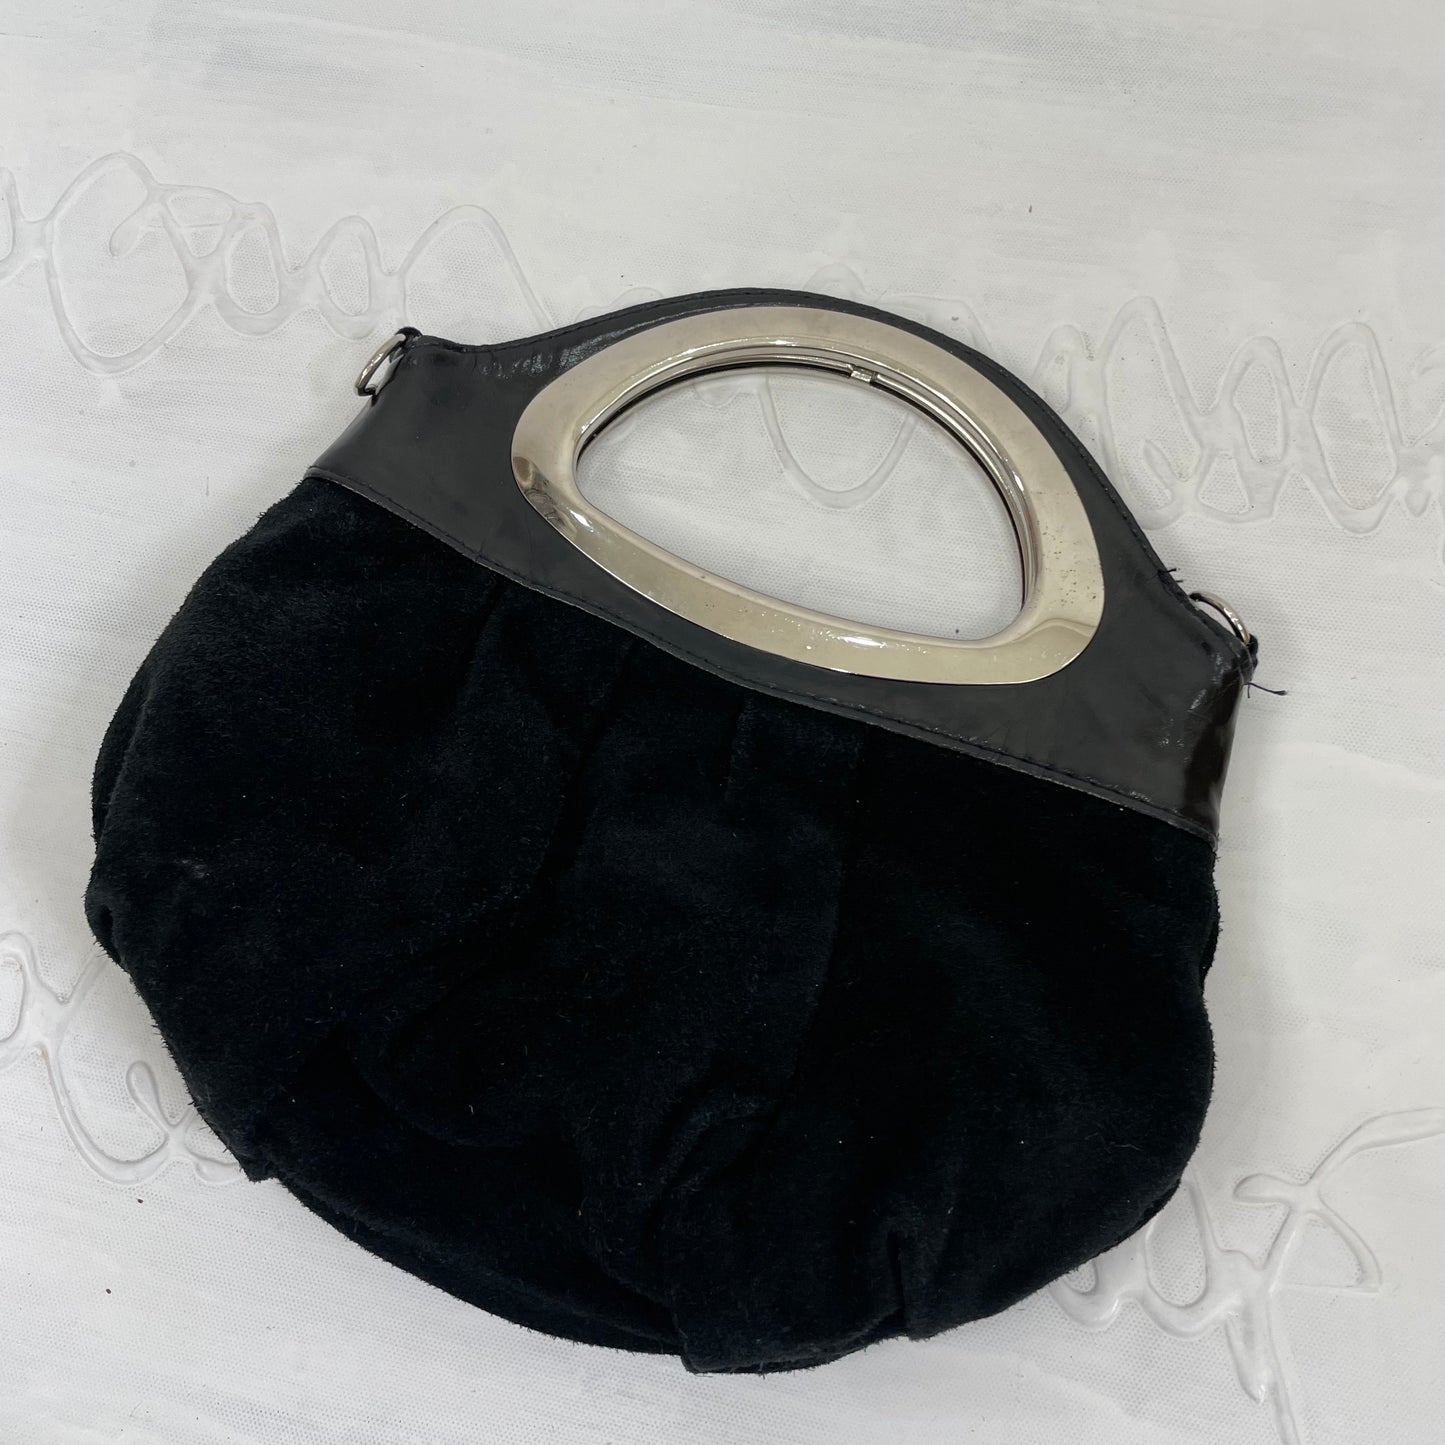 MANHATTAN GIRL DROP | black velvet bag with silver hardware